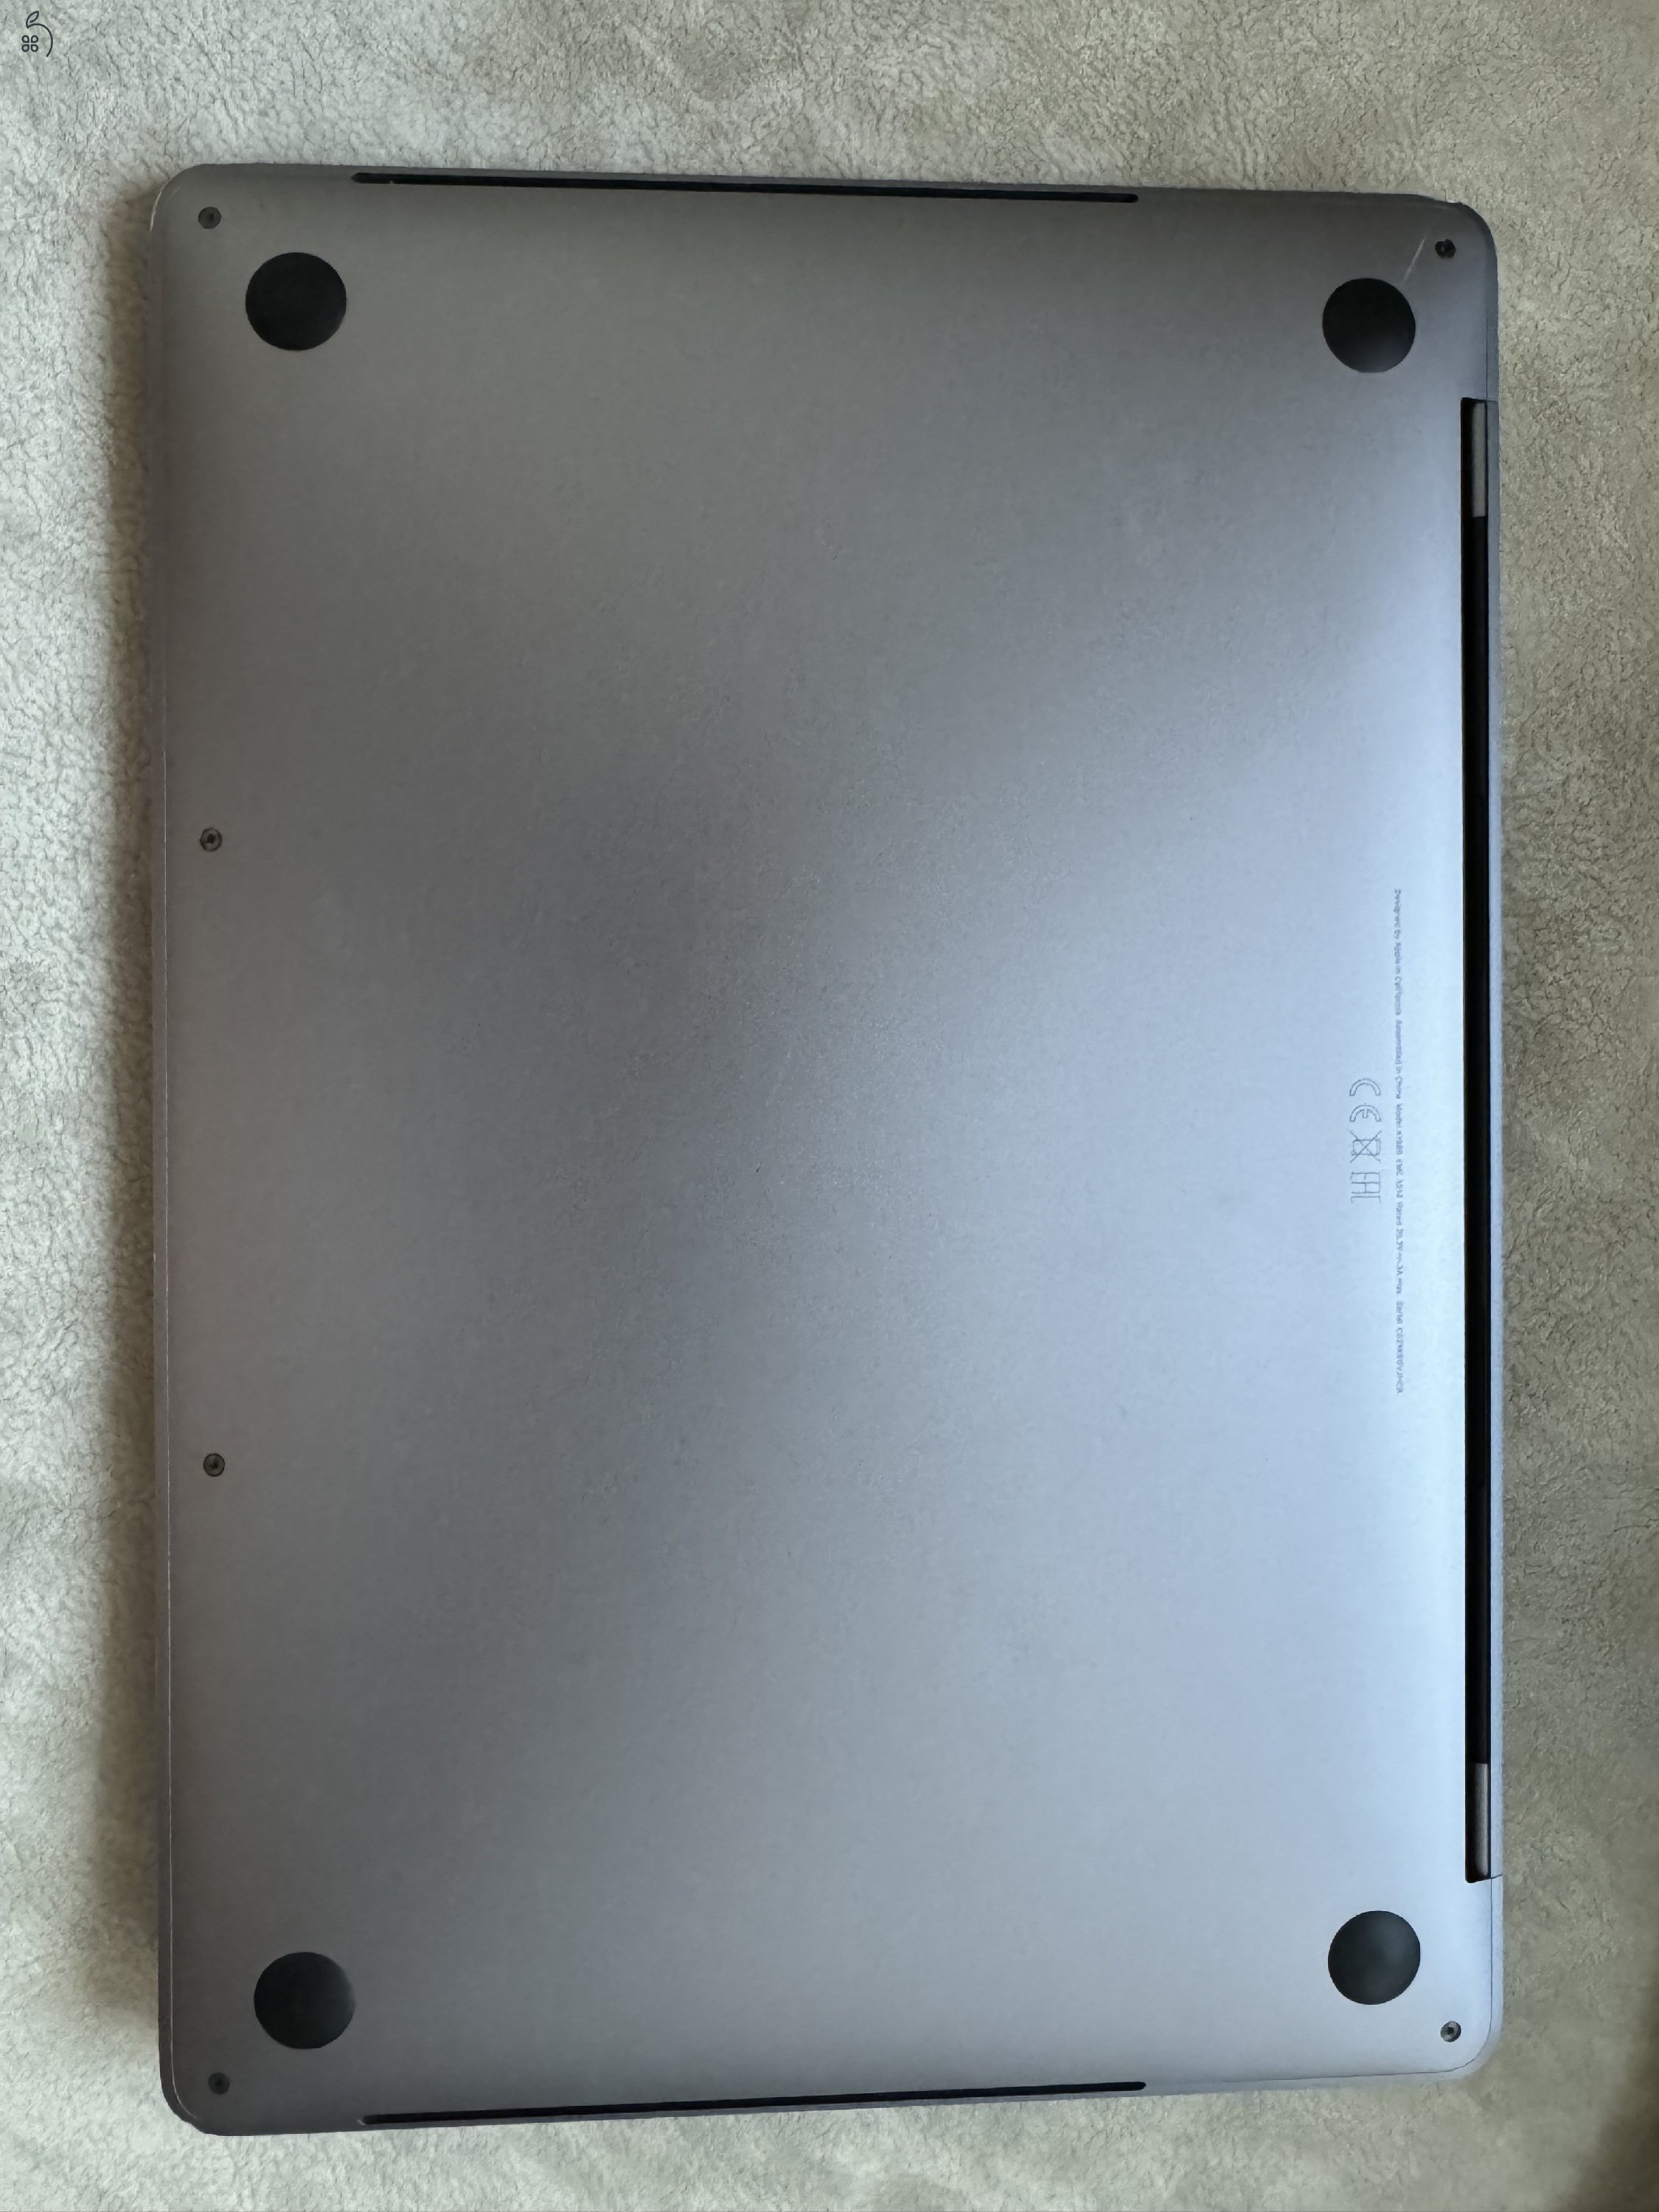 Macbook Pro 13 Touch Bar,2.3GHz intel i5, 256Gb SSD, 8GB RAM